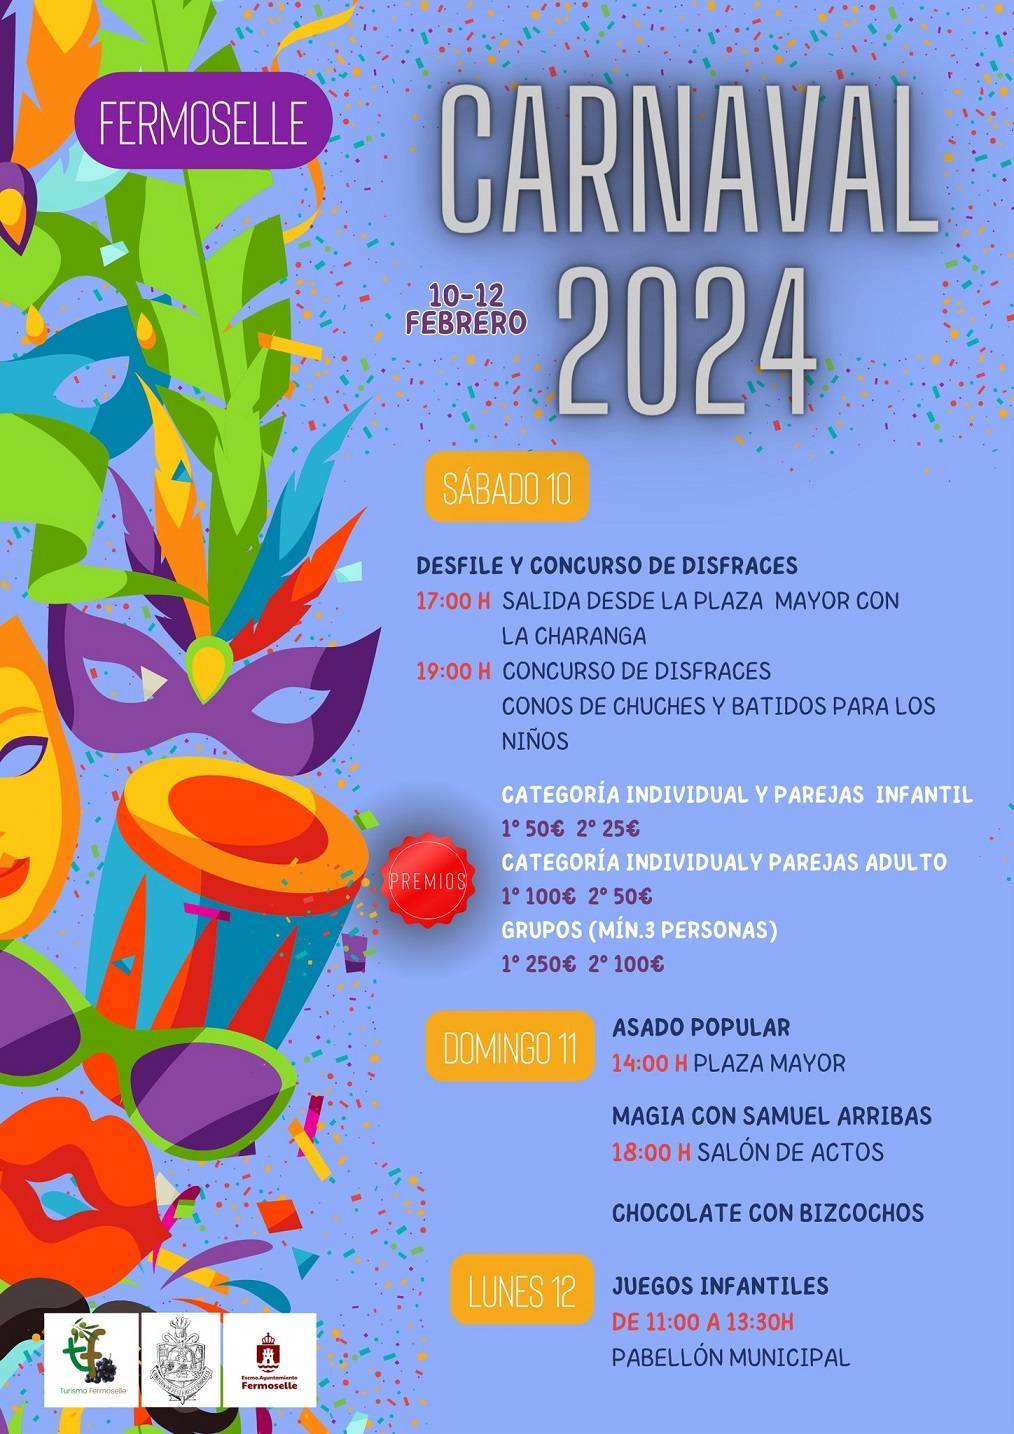 Carnaval (2024) - Fermoselle (Zamora)